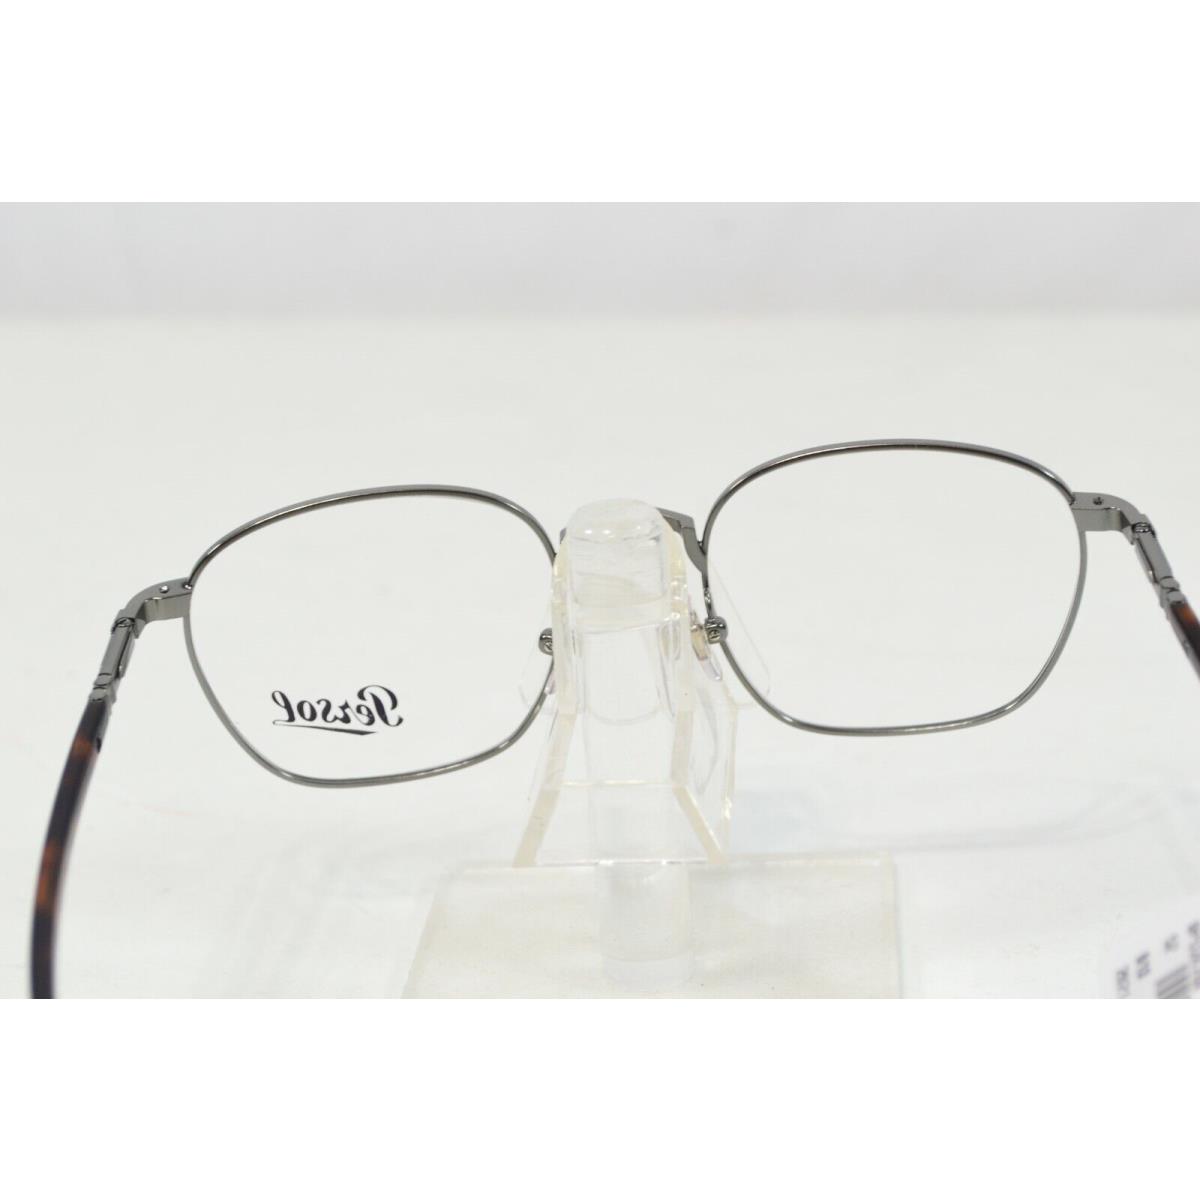 Persol eyeglasses  - Gray Frame 3